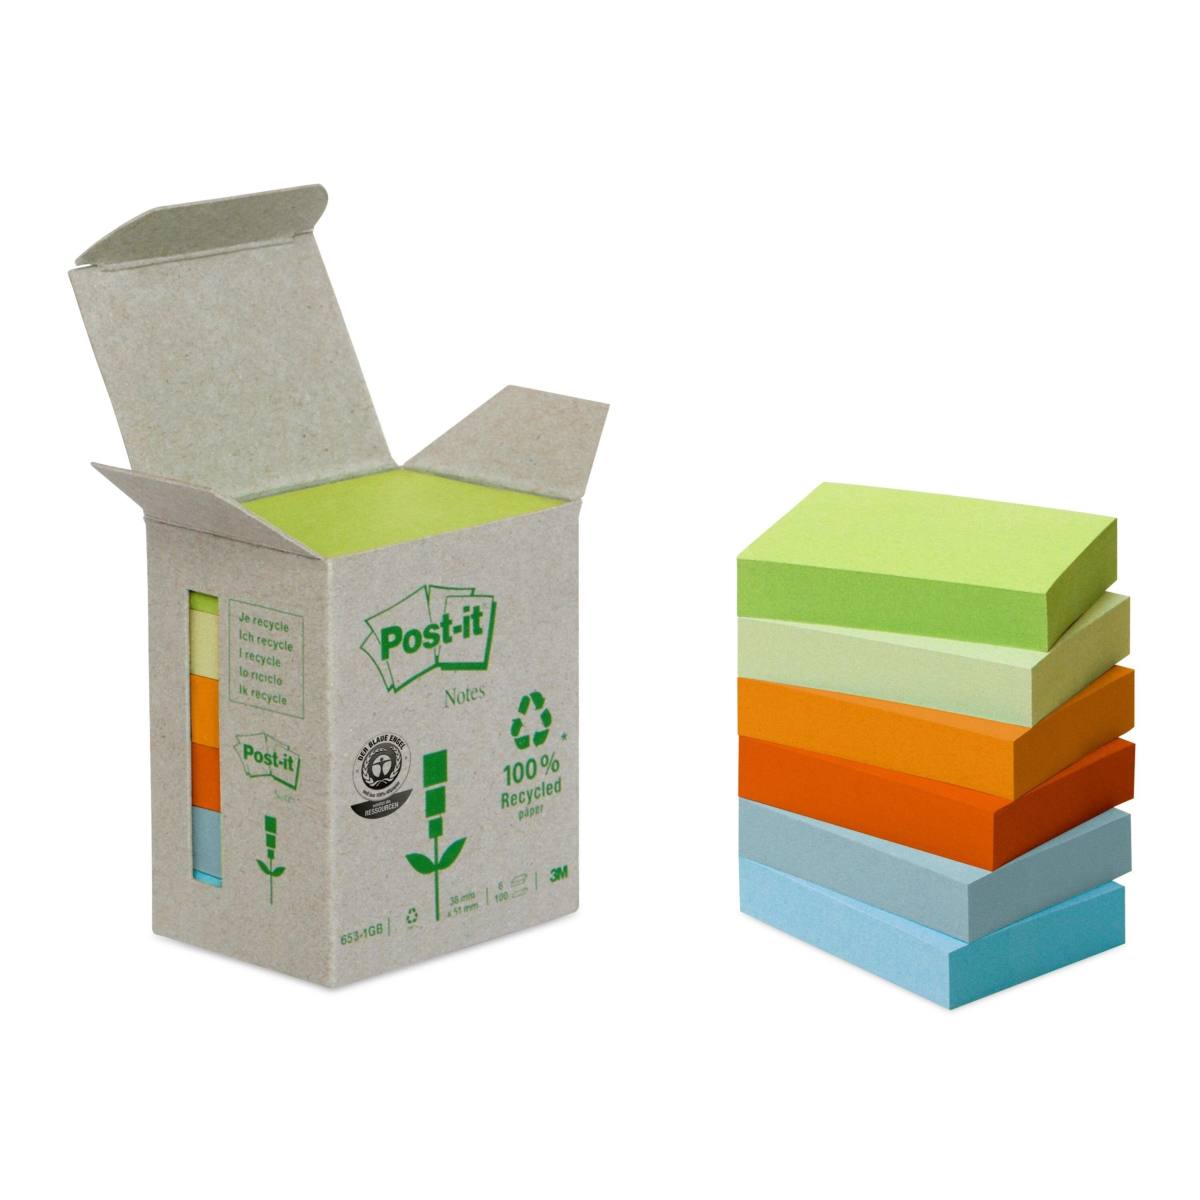 3M Post-it Recycling Notes 653-1GB, 51 mm x 38 mm, différentes couleurs, 6 blocs de 100 feuilles